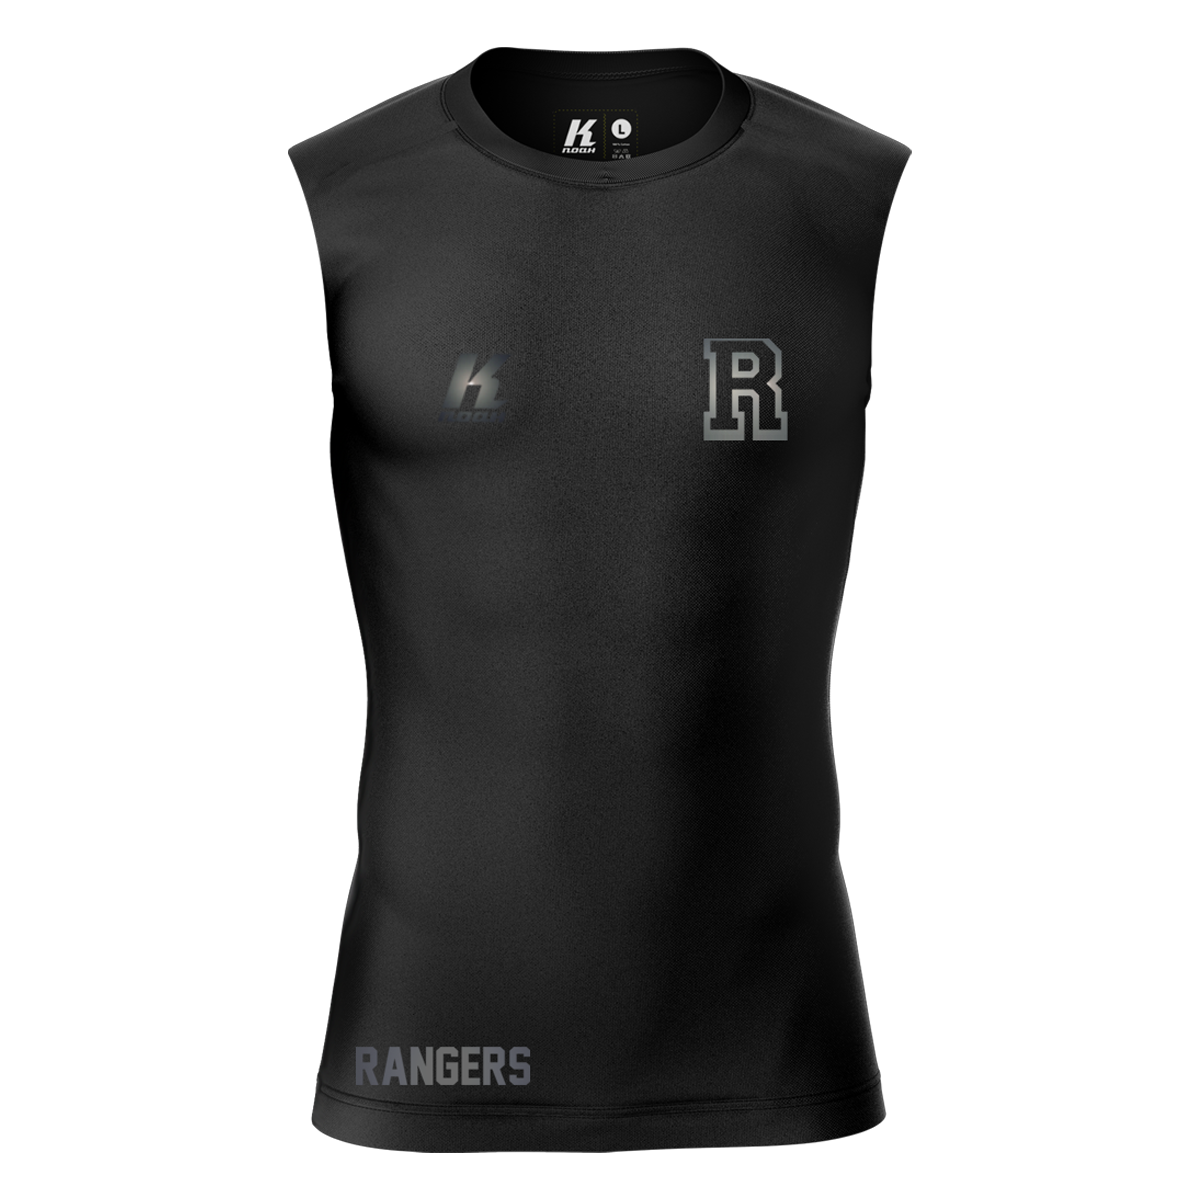 Rangers "Blackline" K.Tech Compression Sleeveless Shirt